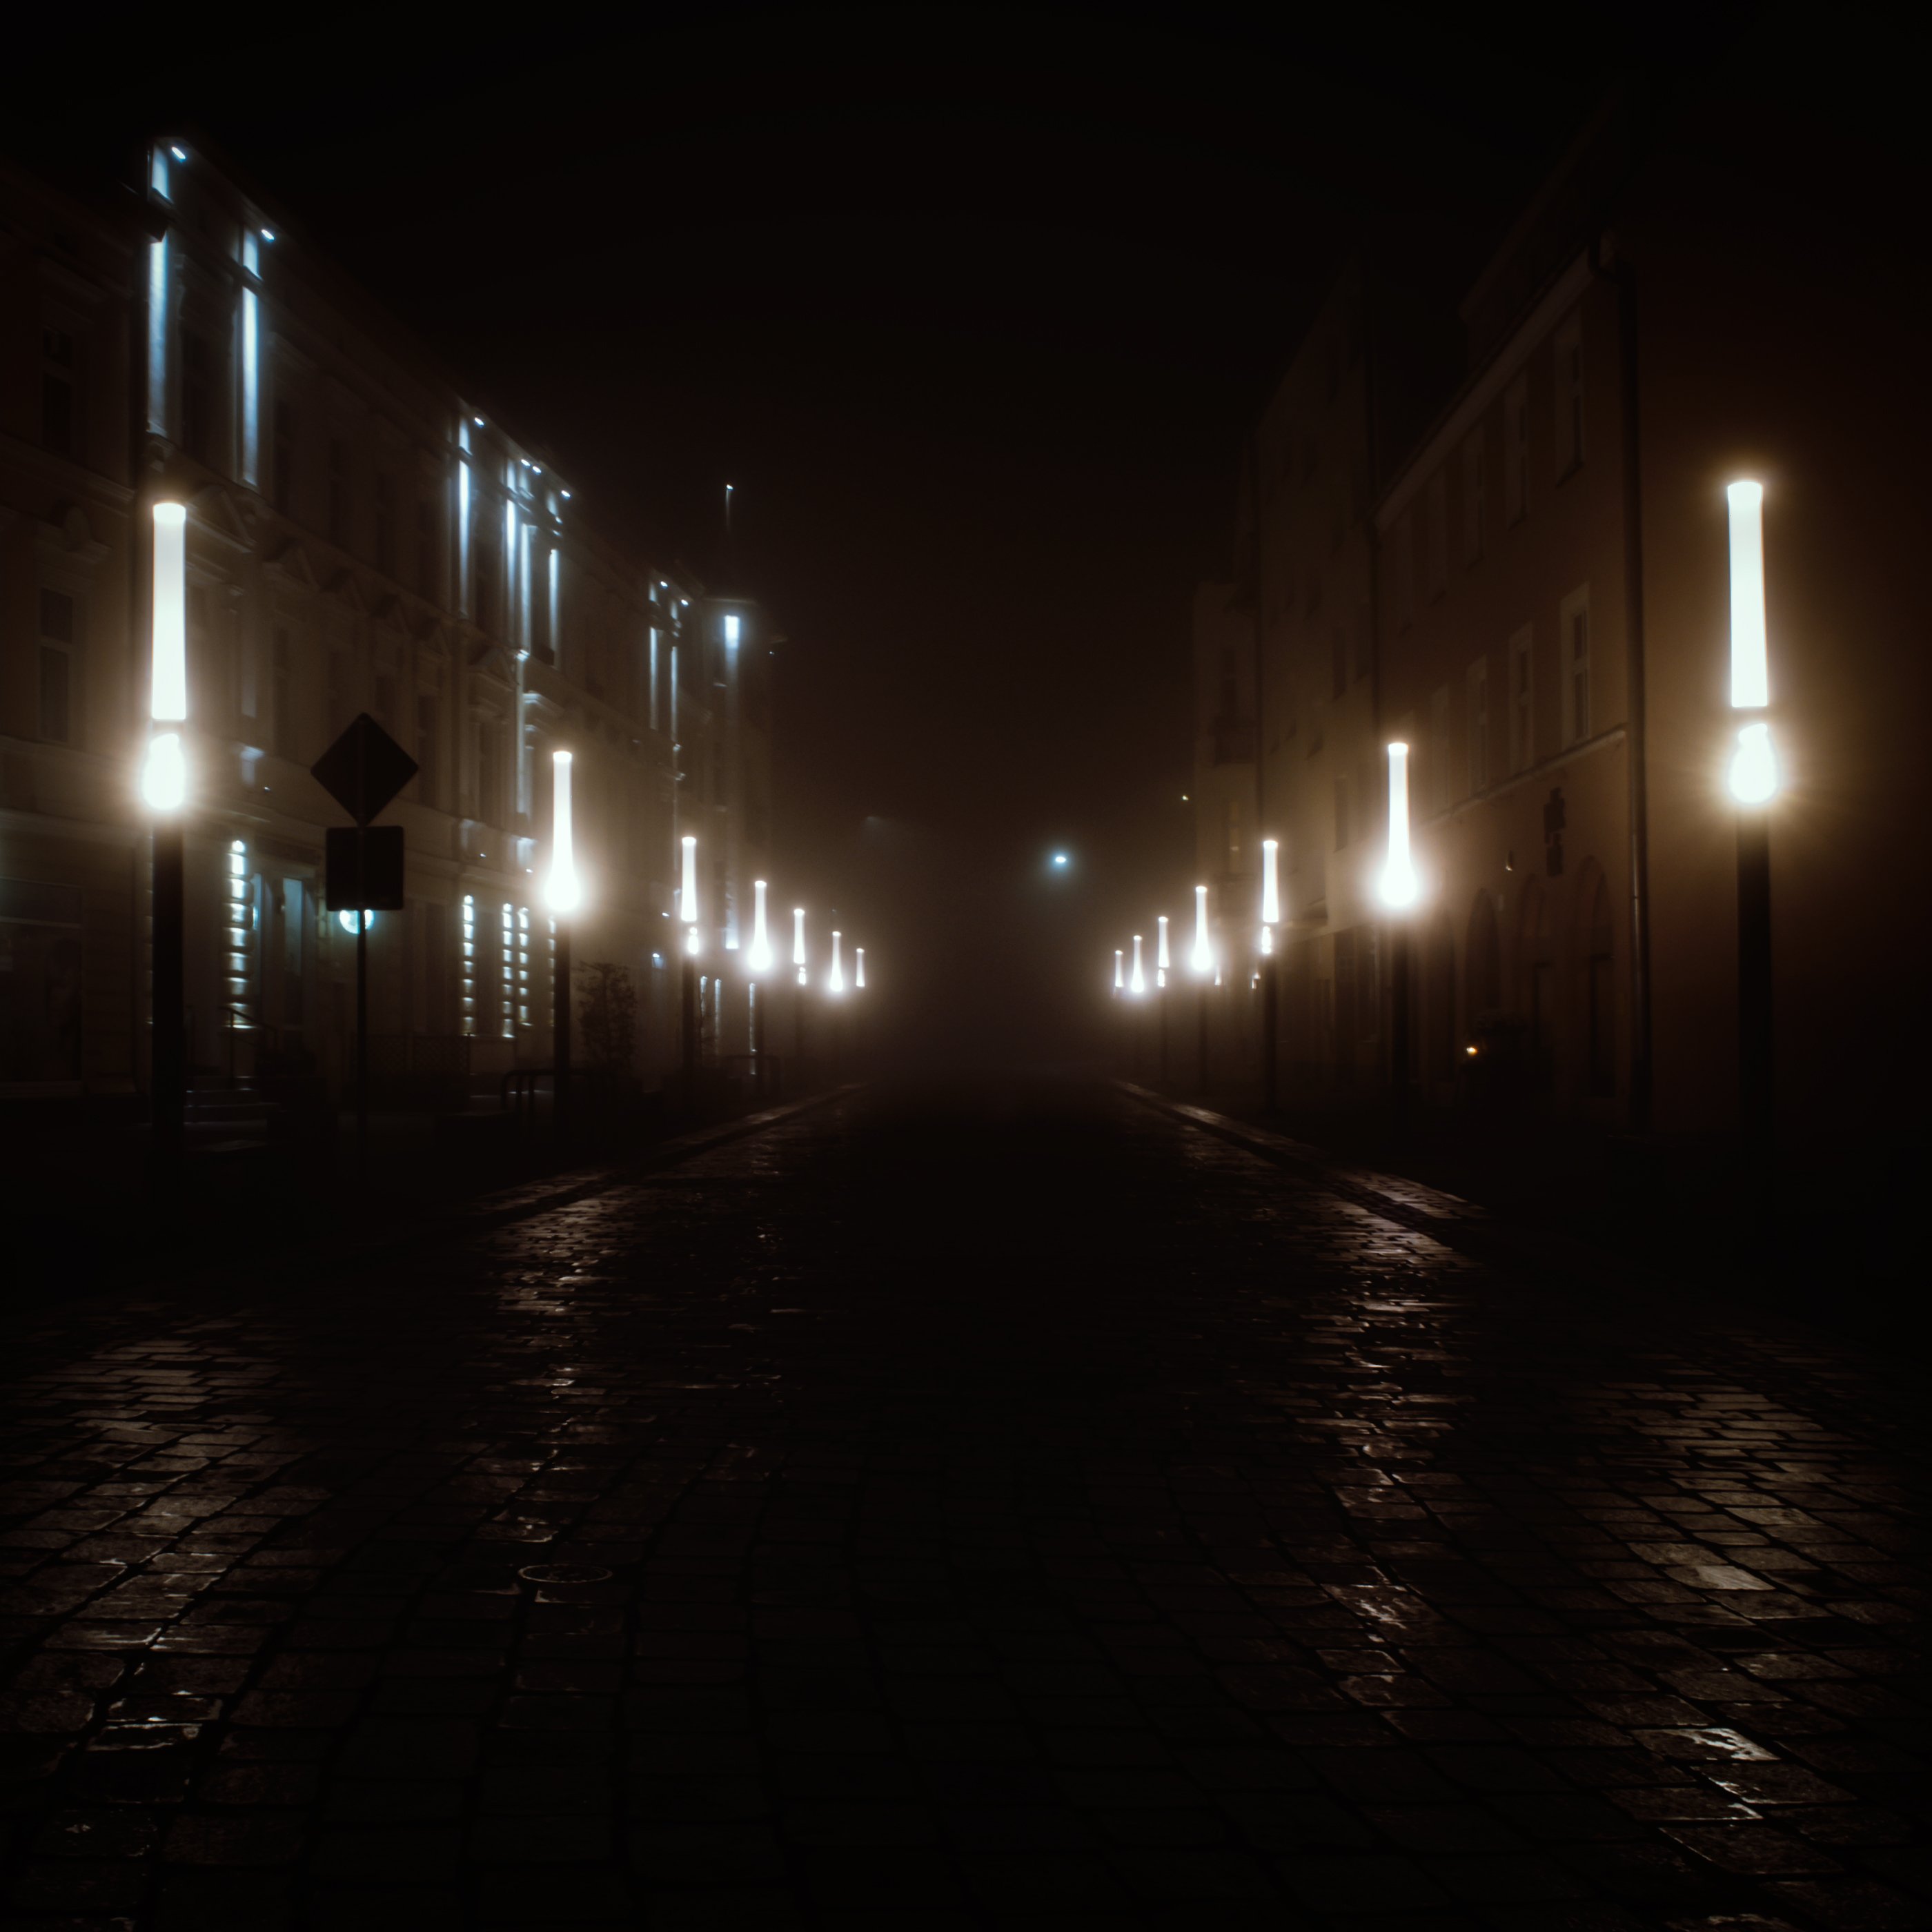 Architecture  City  Night  No People  street  fog  in the dark  lamps  moisture  lamp light nikon, Krzysztof Tollas